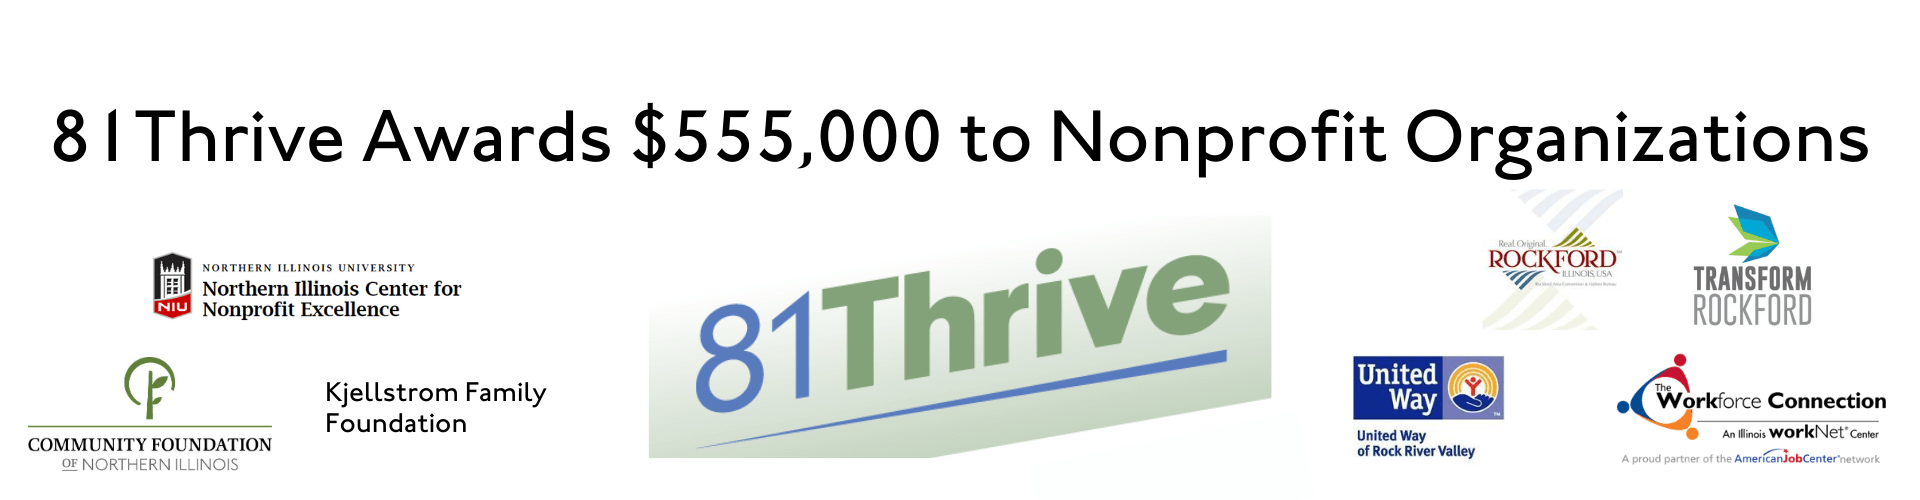 81Thrive Awards $555,000 to Nonprofit Organizations